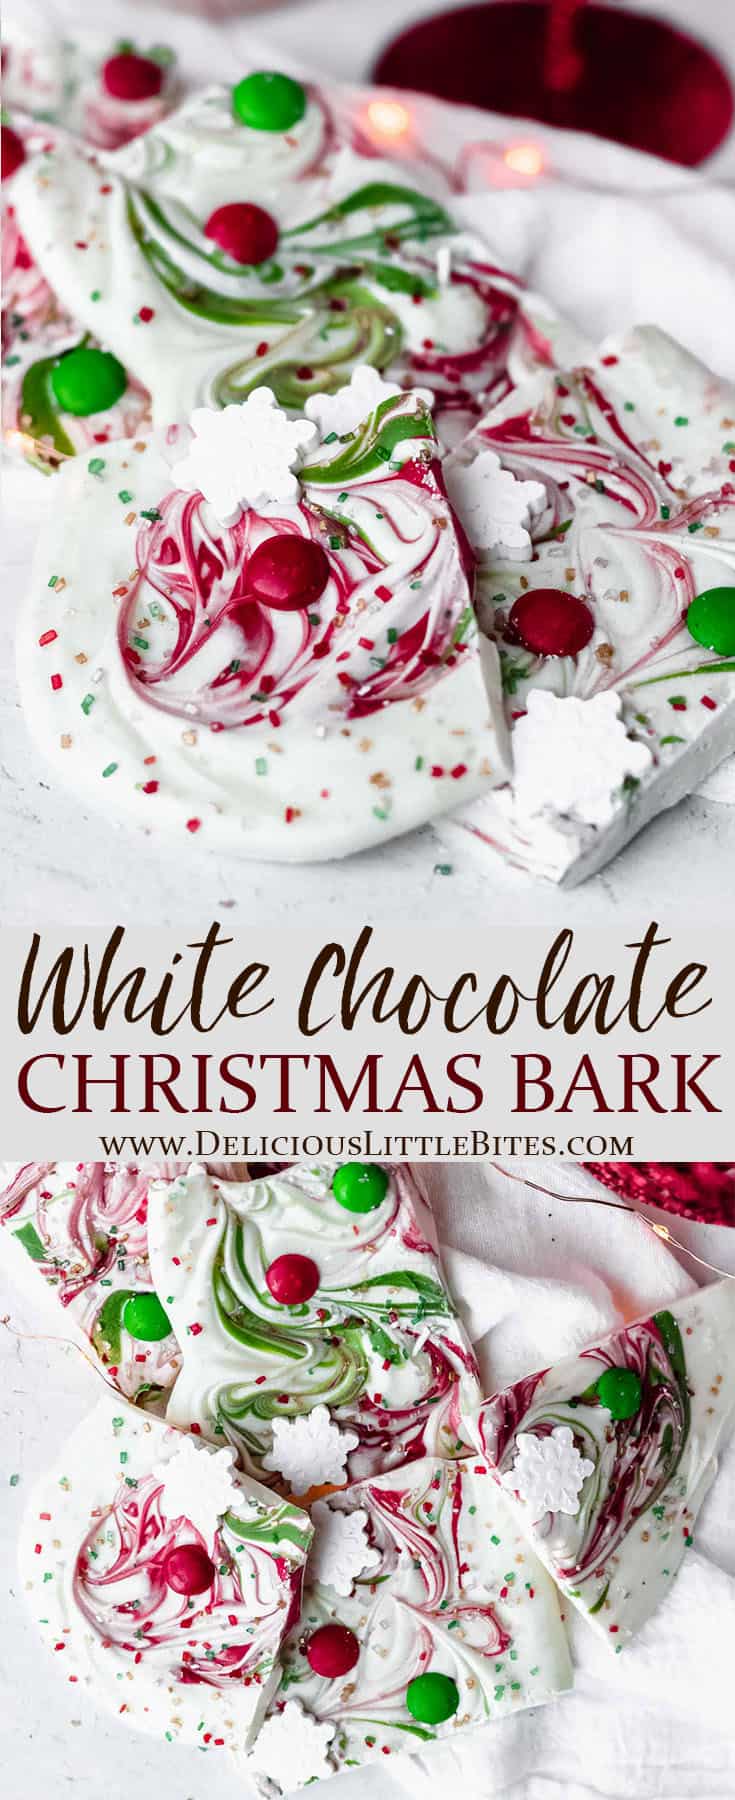 White Chocolate Christmas Bark - Delicious Little Bites